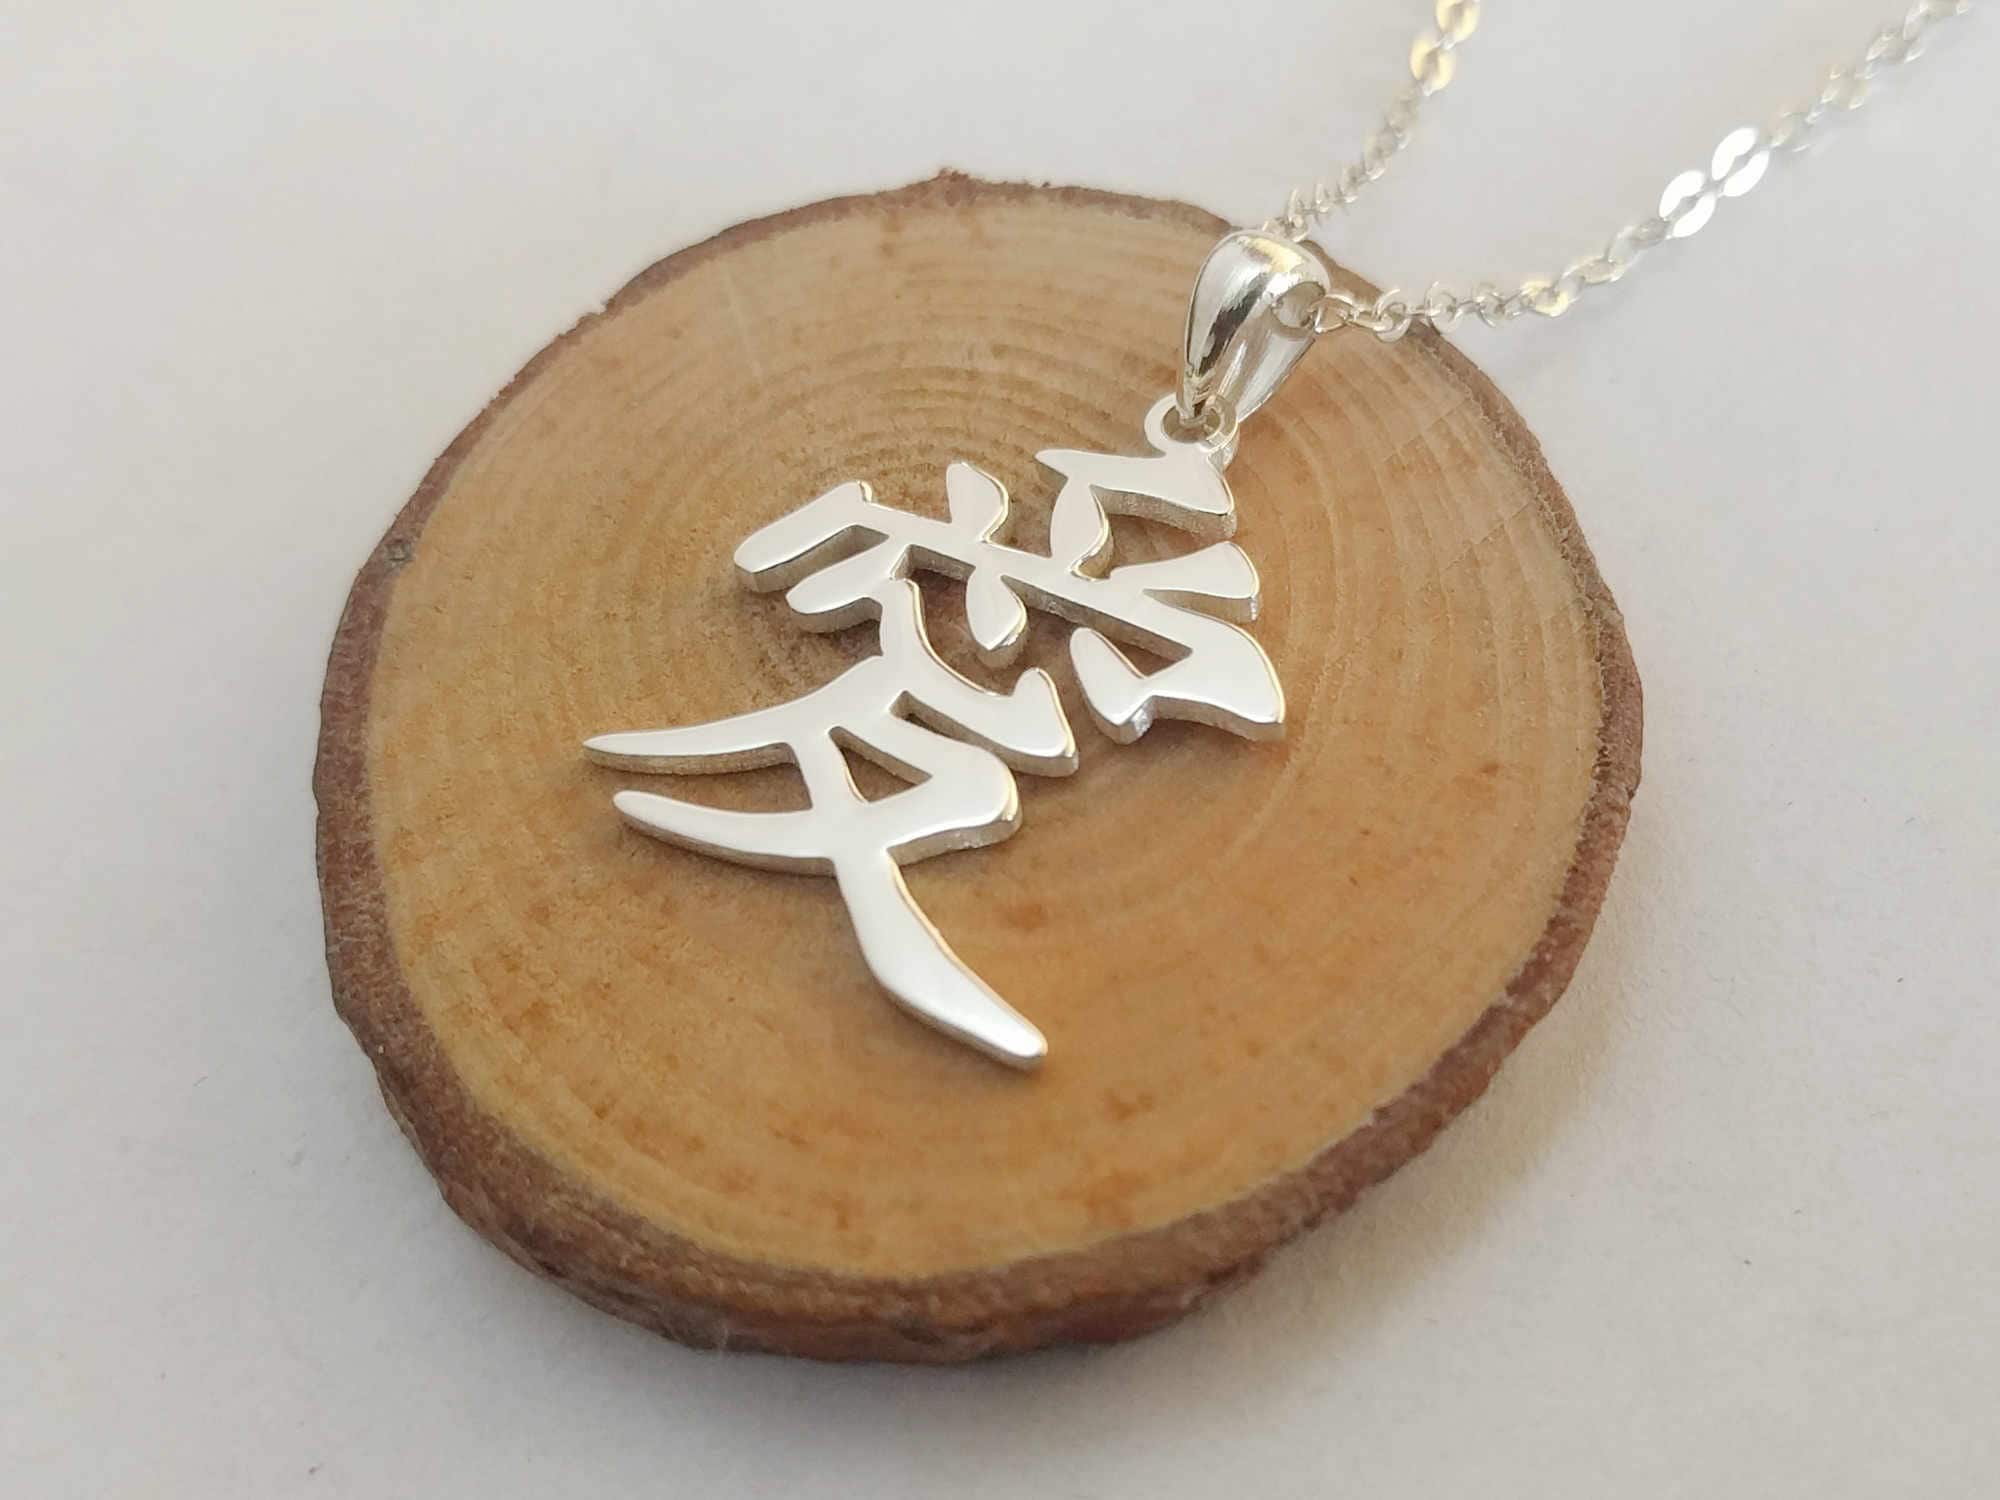 Pretty Chinese symbol necklace ? Jade heart shaped pendant | eBay